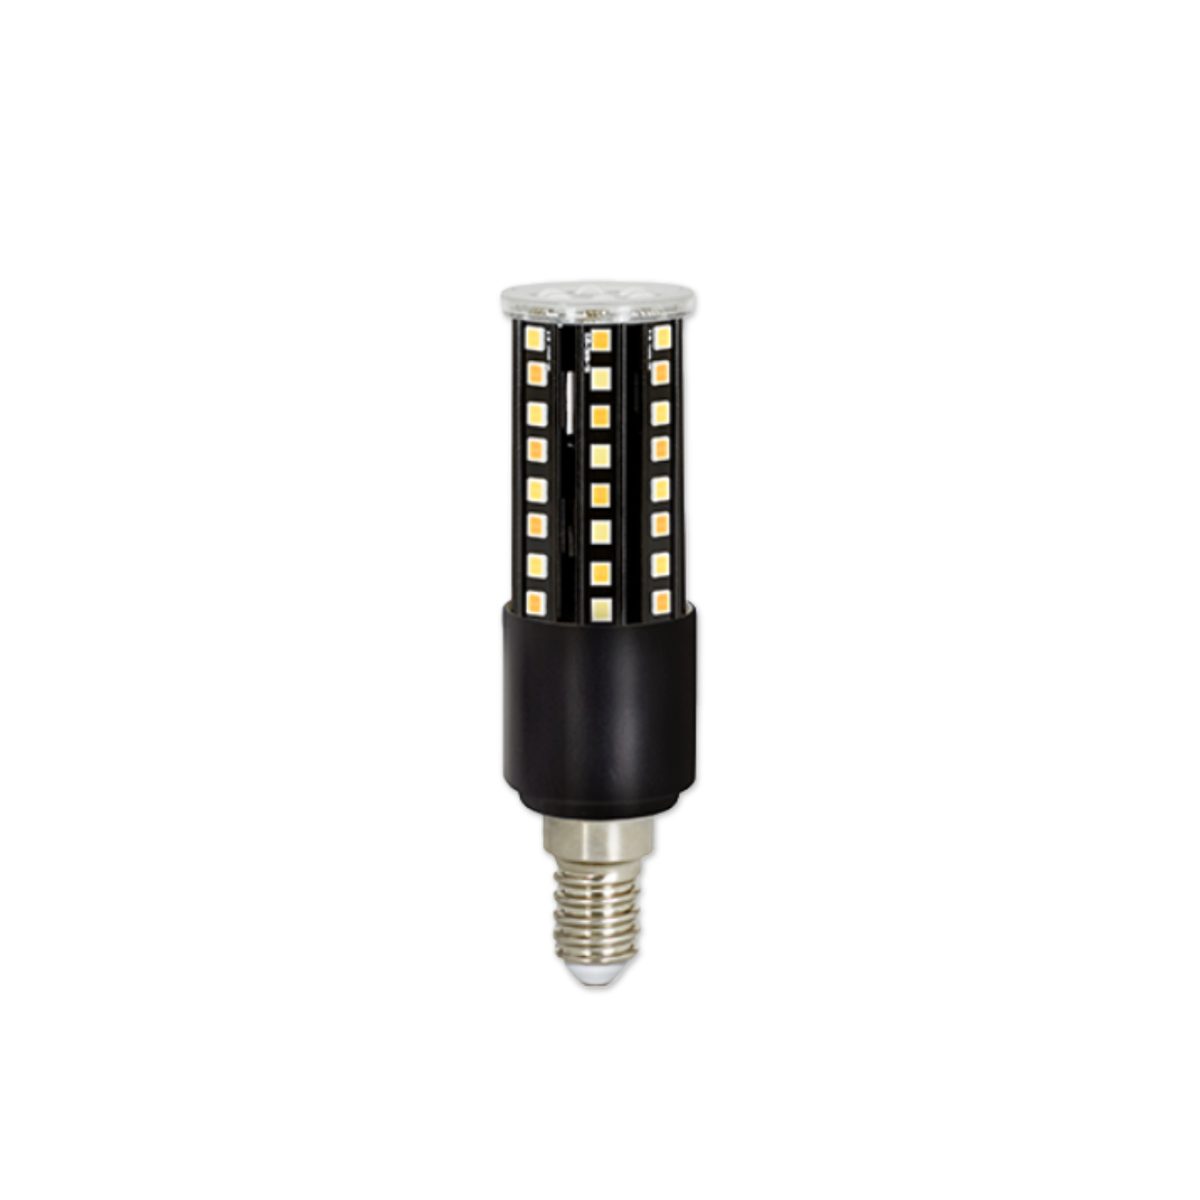 Tala LED-Leuchtmittel LIGHT ENGINE I by tala - LED Leuchtmittel 11W, E14, E14, Warmweiß, Dimm to Warm - 2200-2700K